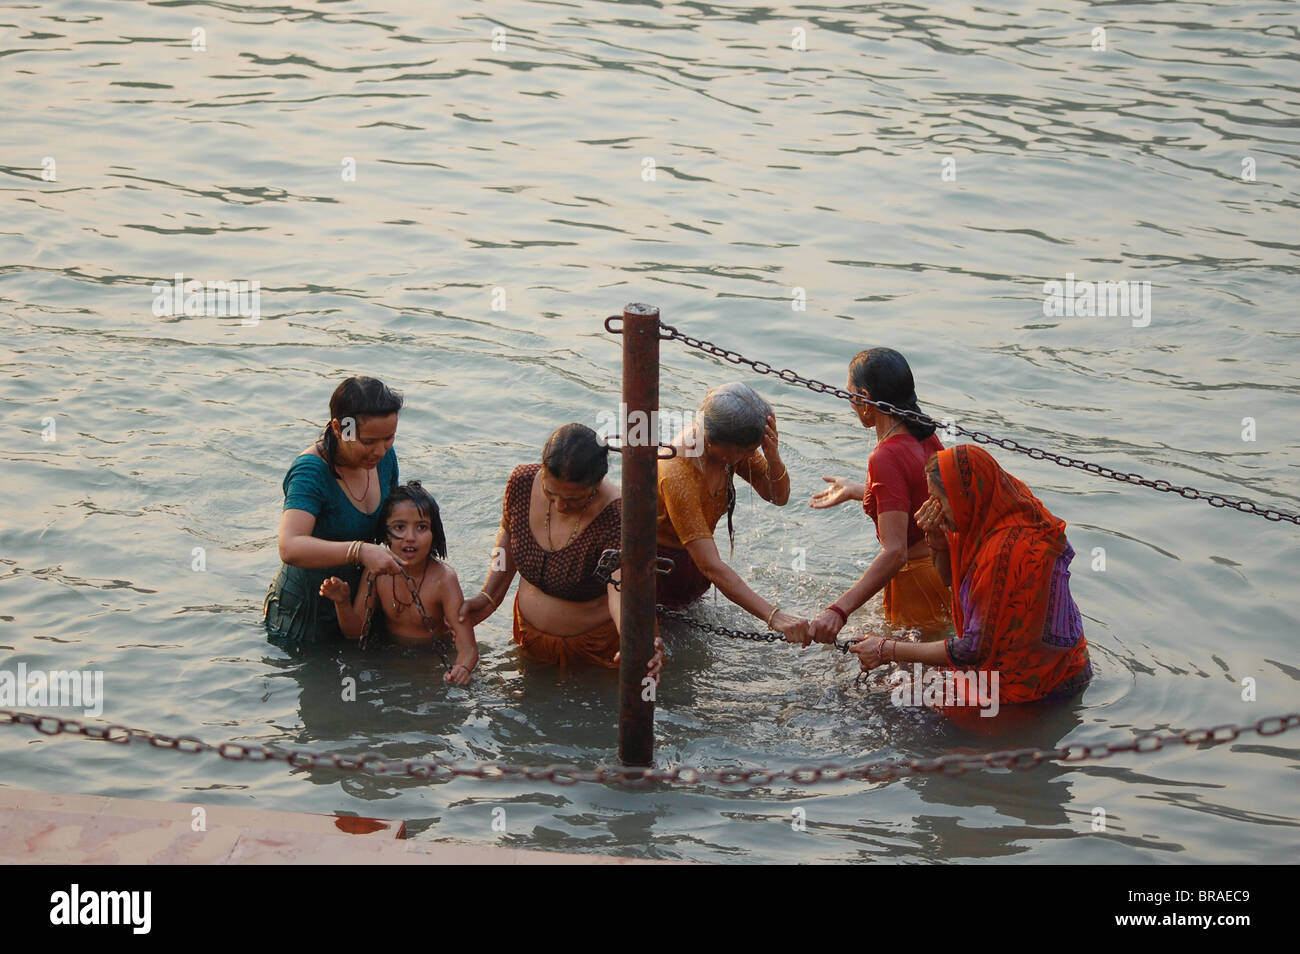 women bathing in holy river Ganges in India during Kumbh Mela festival Stock Photo